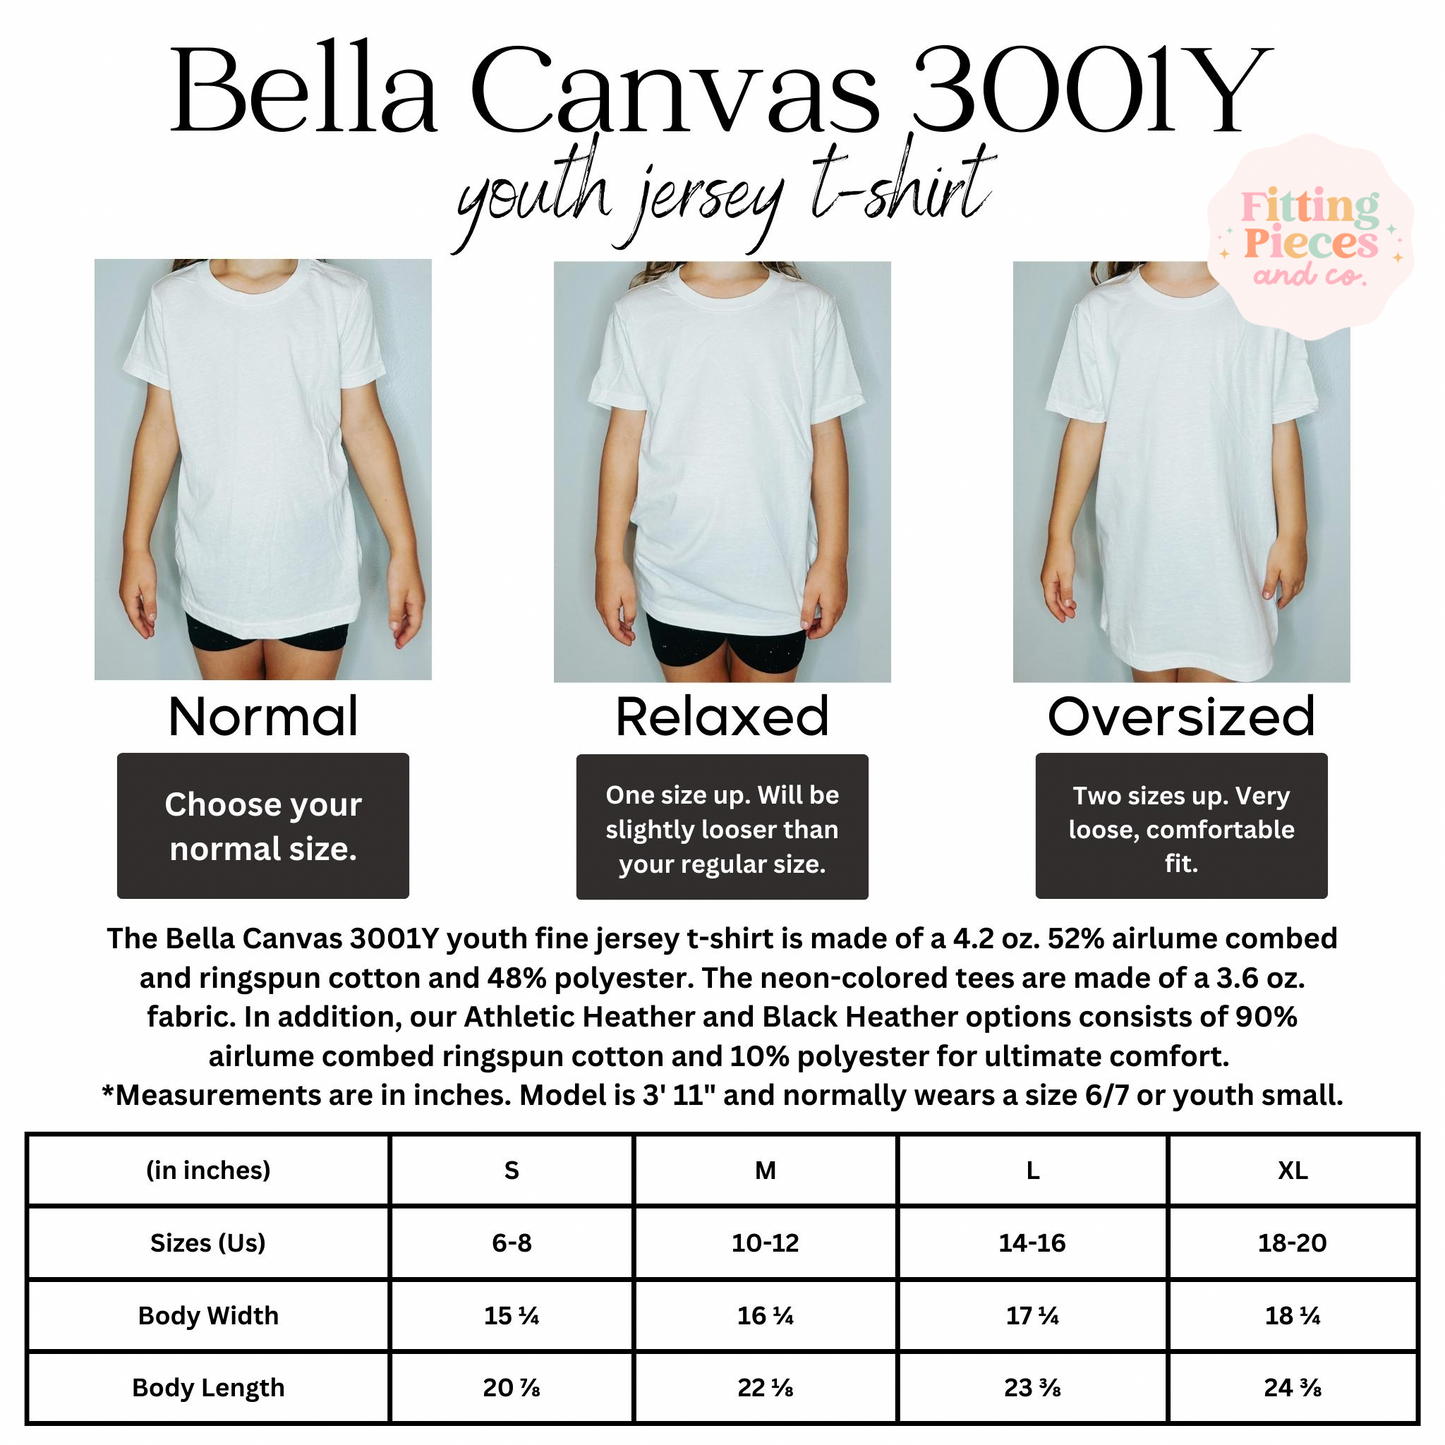 Princess Eras Lineup T-Shirt | Youth Bella+Canvas Unisex